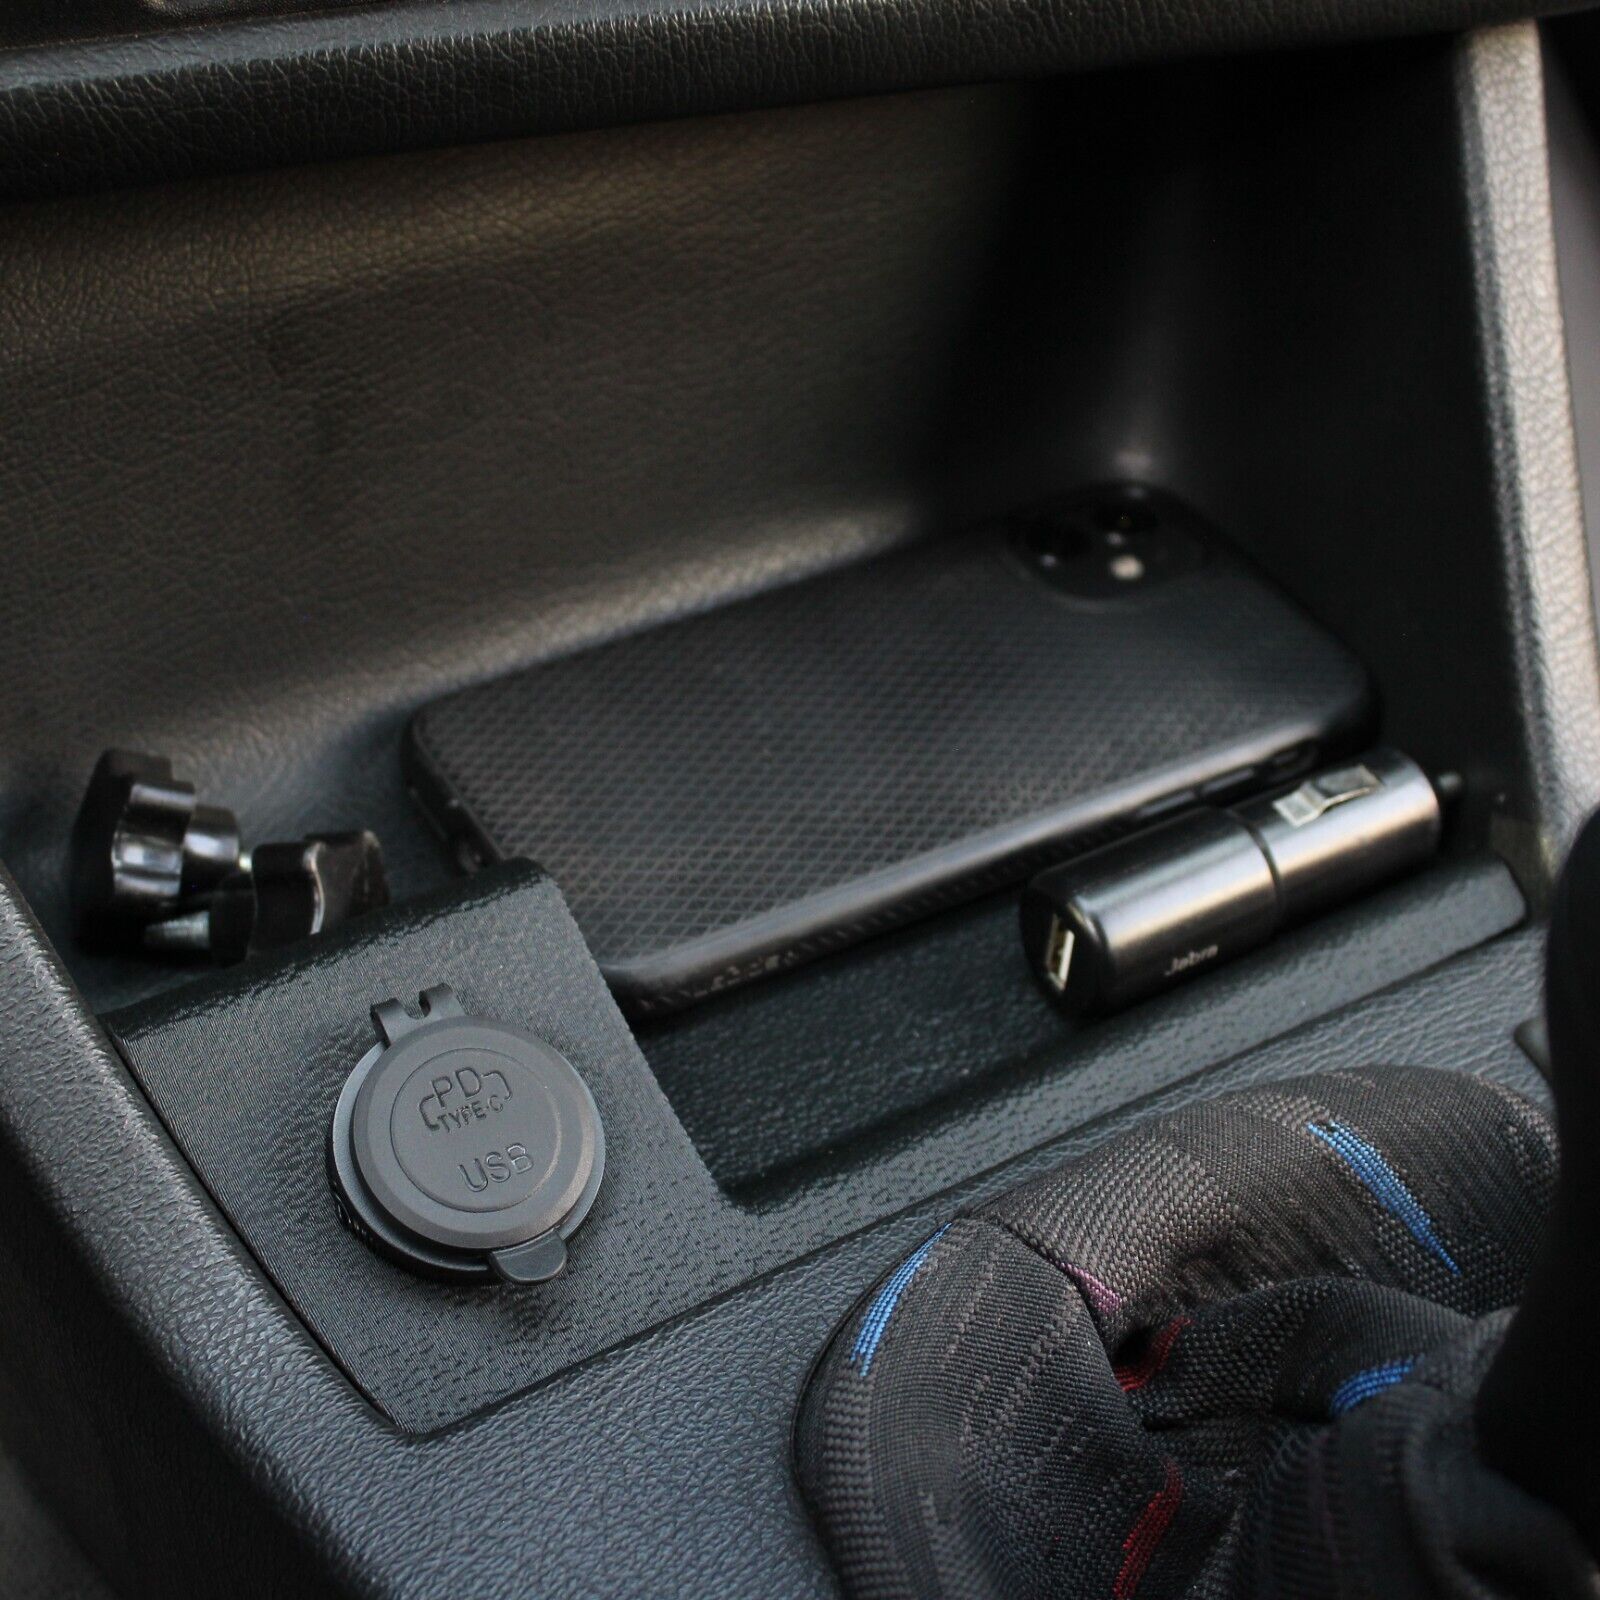 BMW E30 Utility Panel & Phone Mount - Single USB Charge Socket